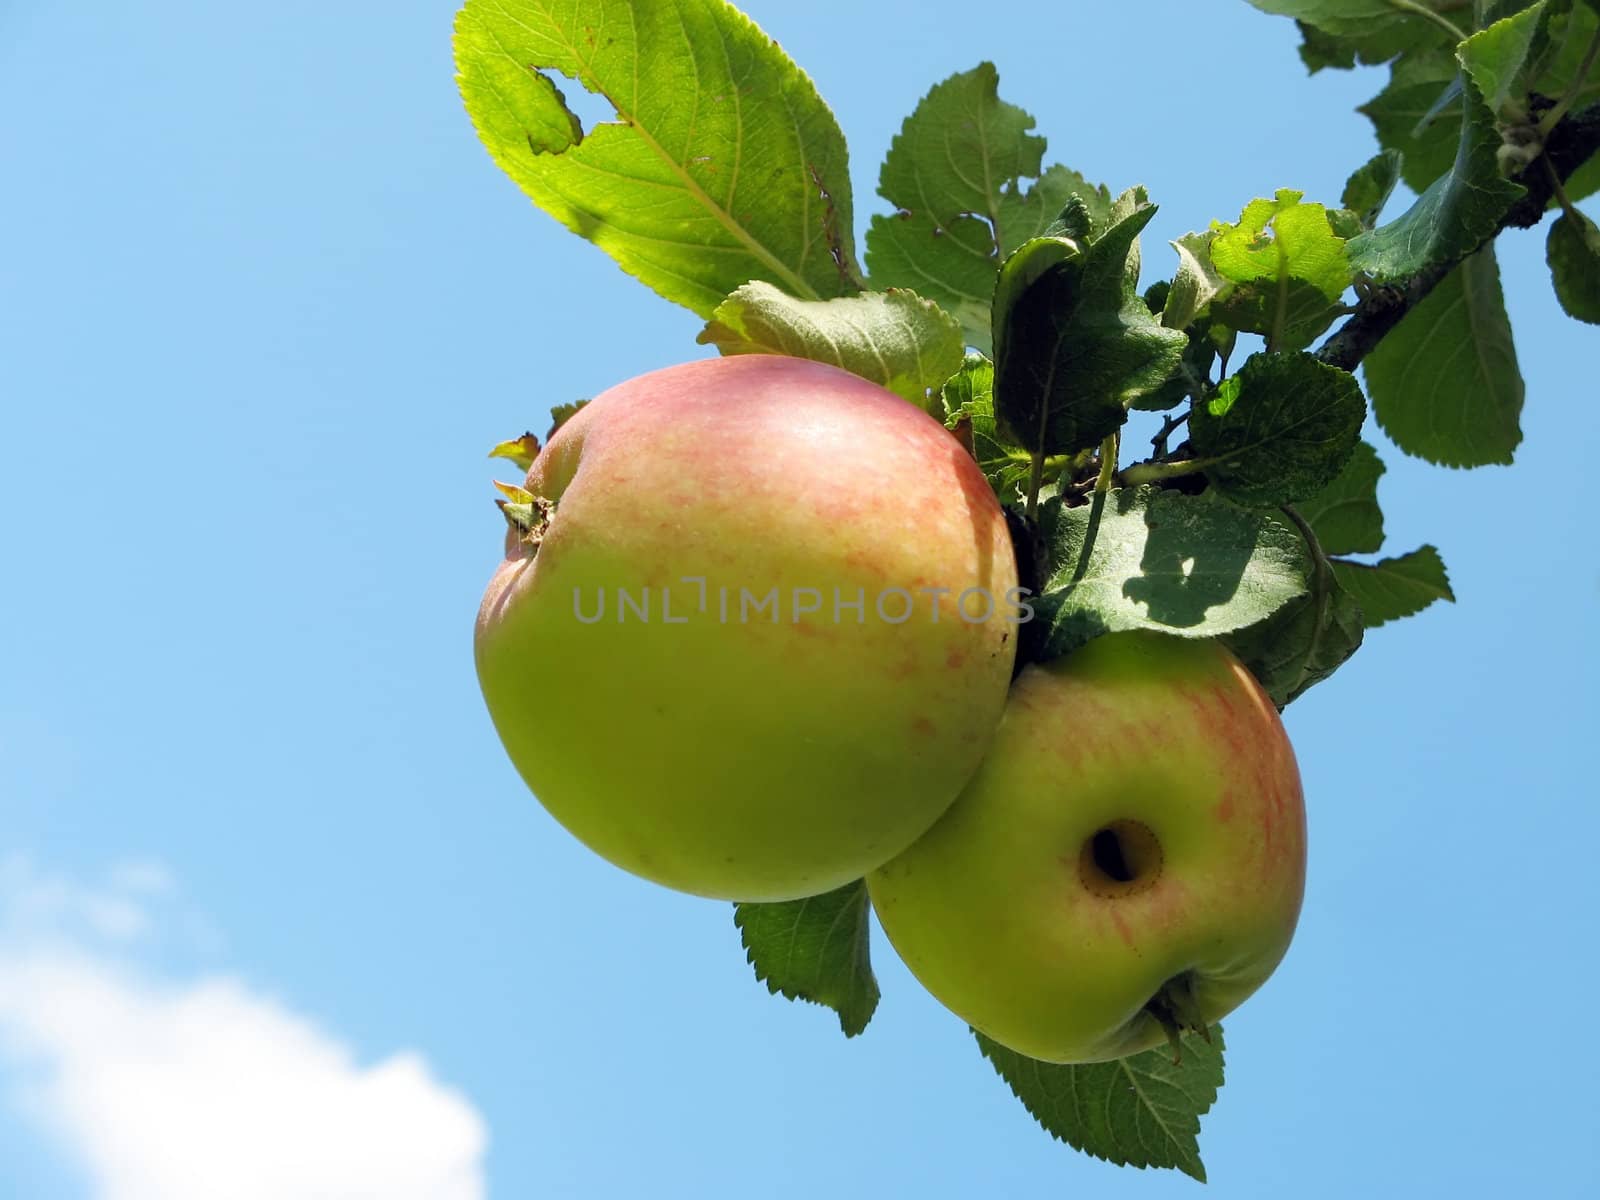 Apples by Ragnar